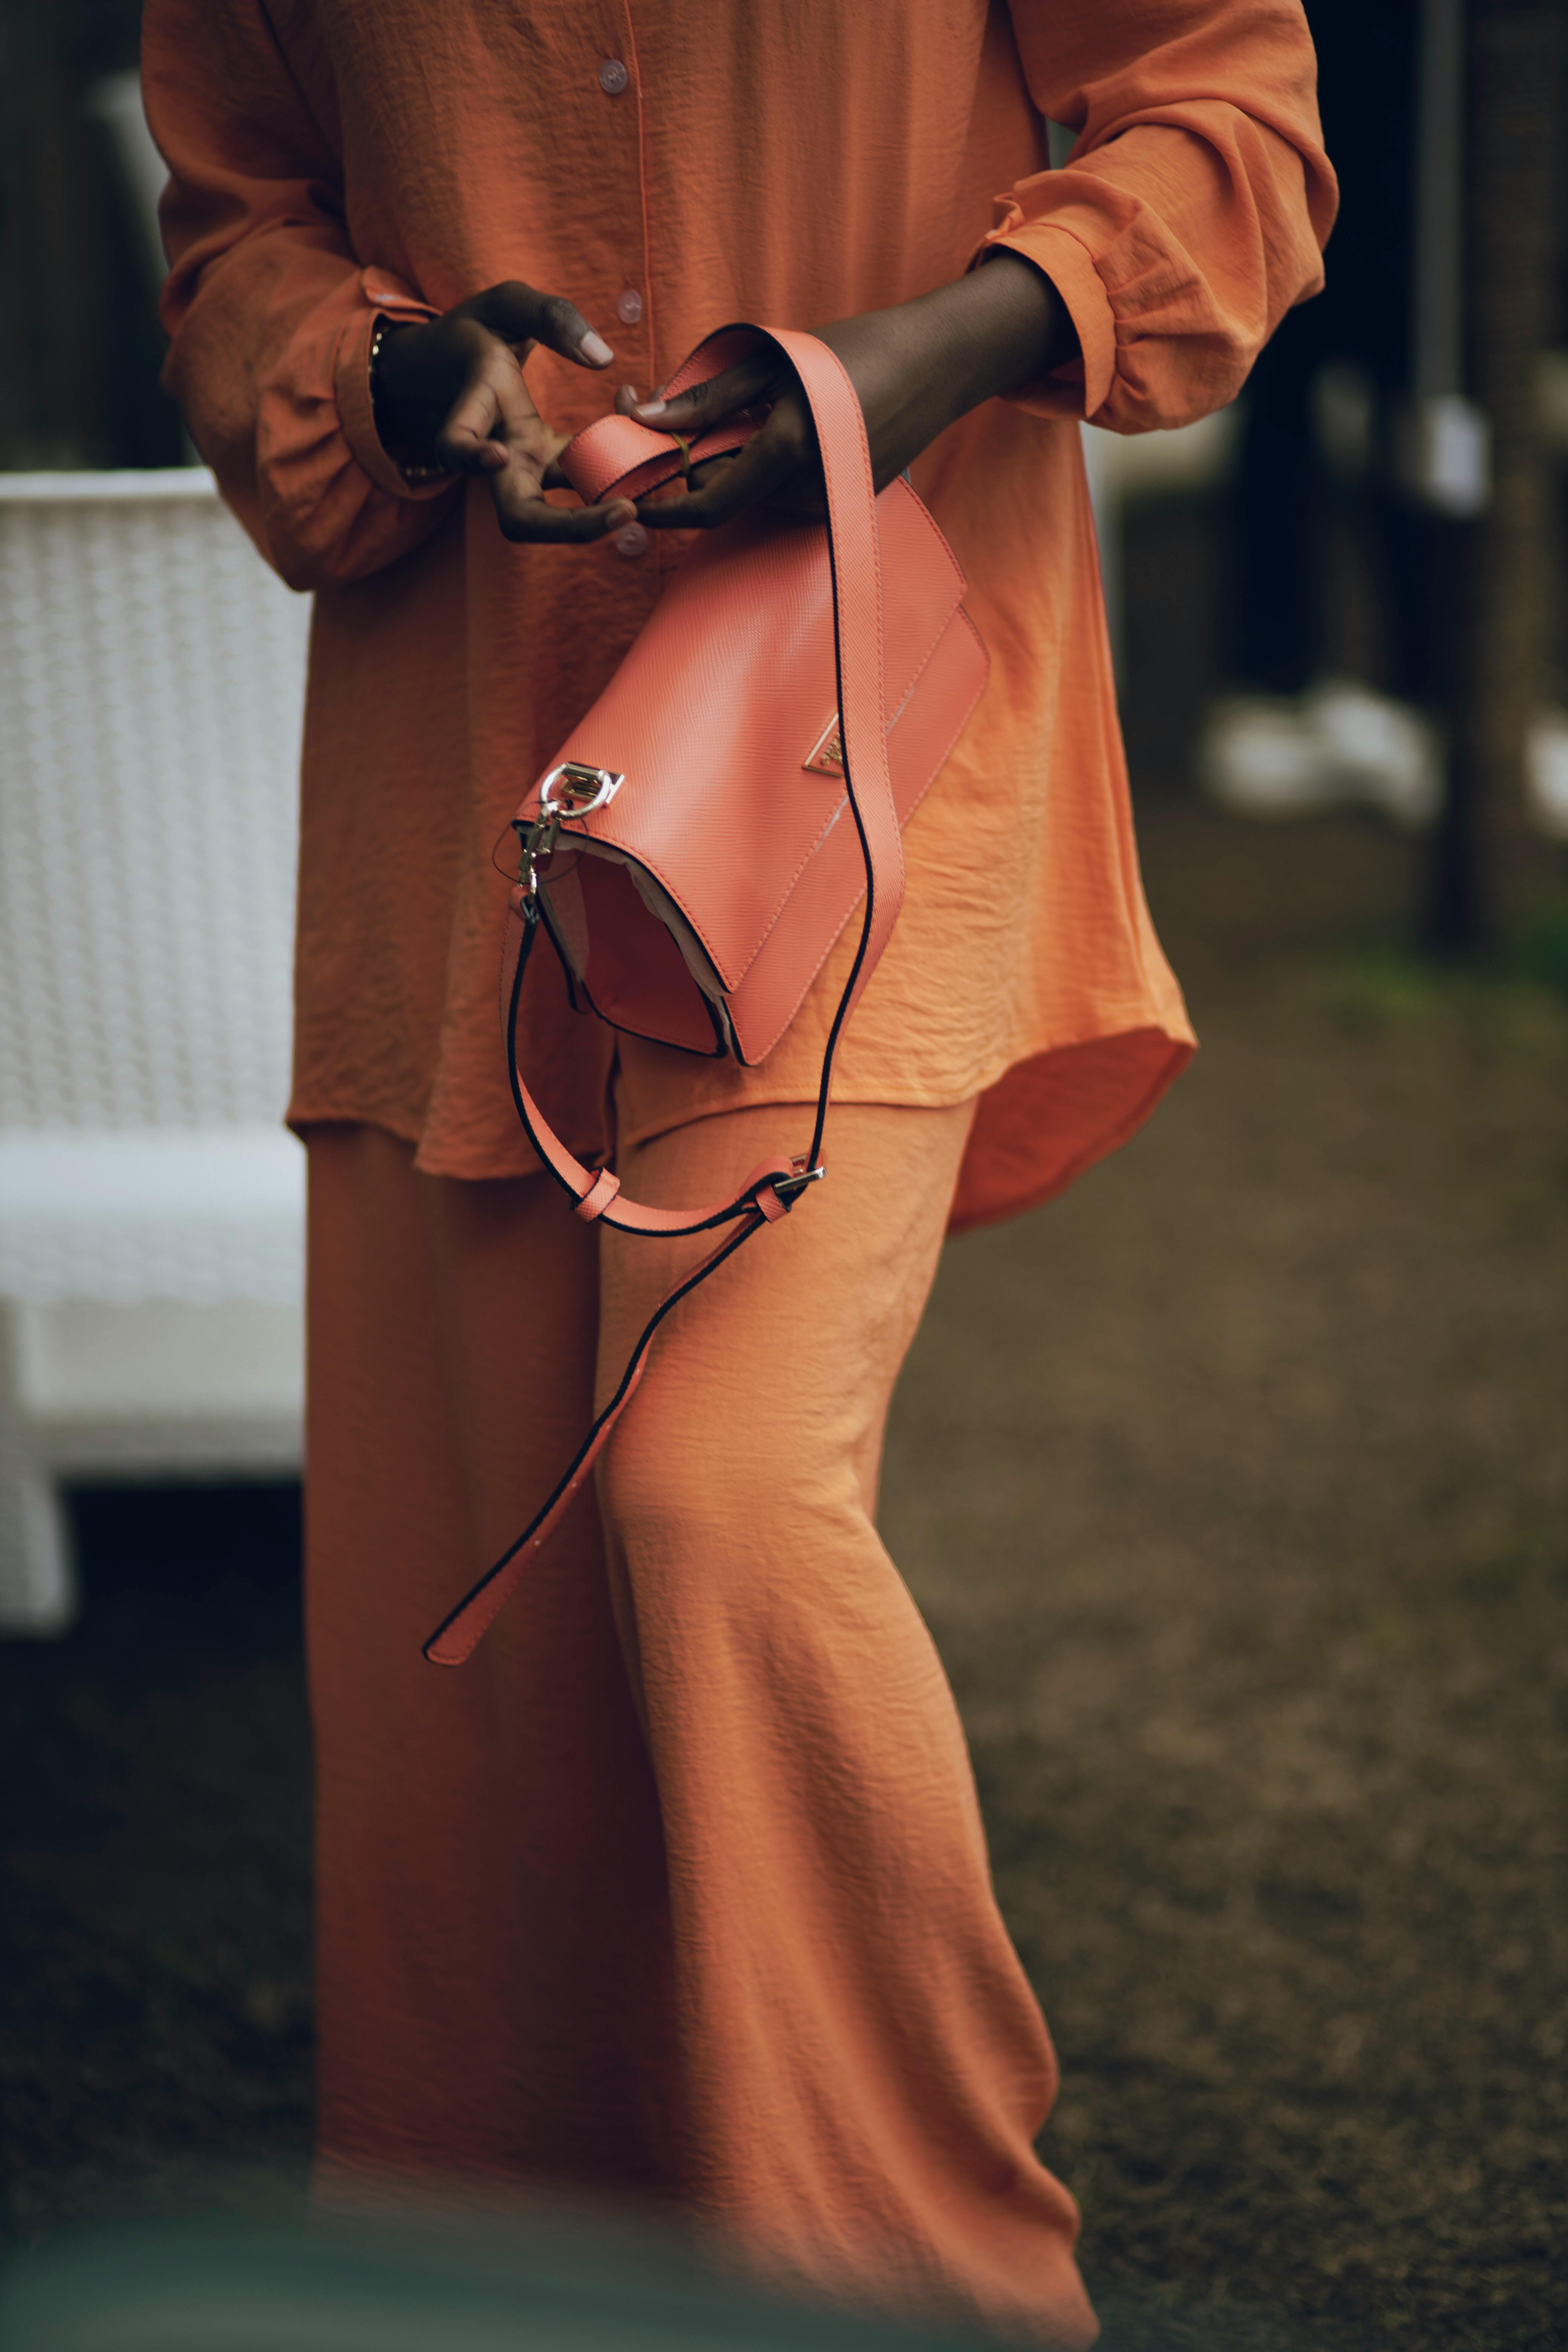 Miranda Kerr is a neon beauty in pink and orange dress at Paris Fashion Week